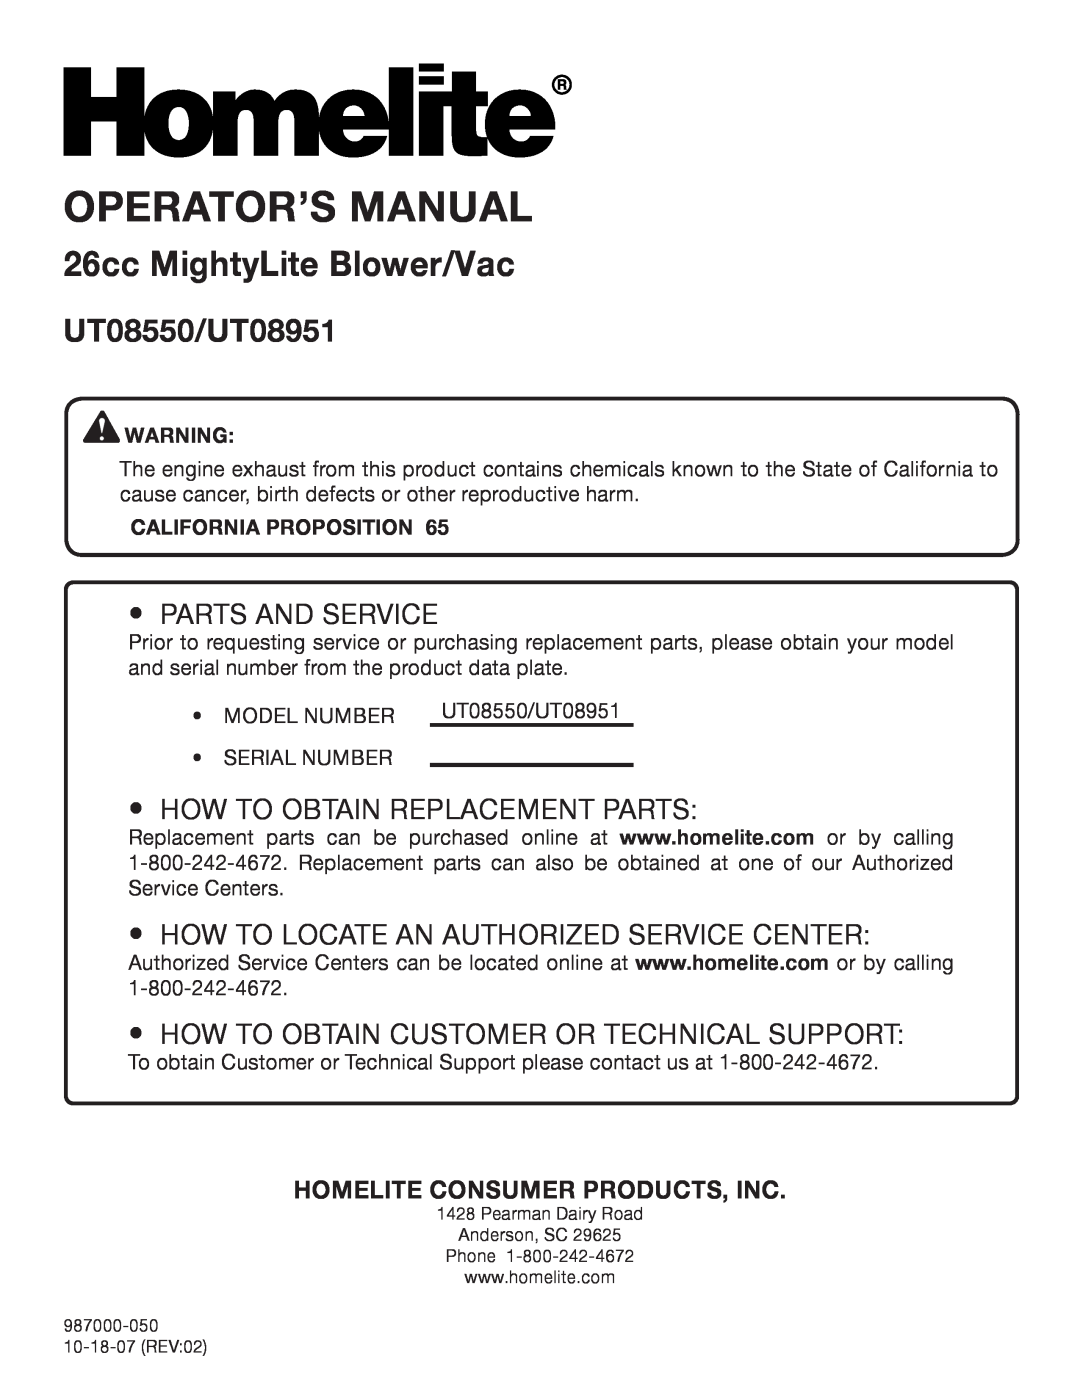 Homelite manual Homelite Consumer Products, Inc, Operator’S Manual, 26cc MightyLite Blower/Vac, UT08550/UT08951 